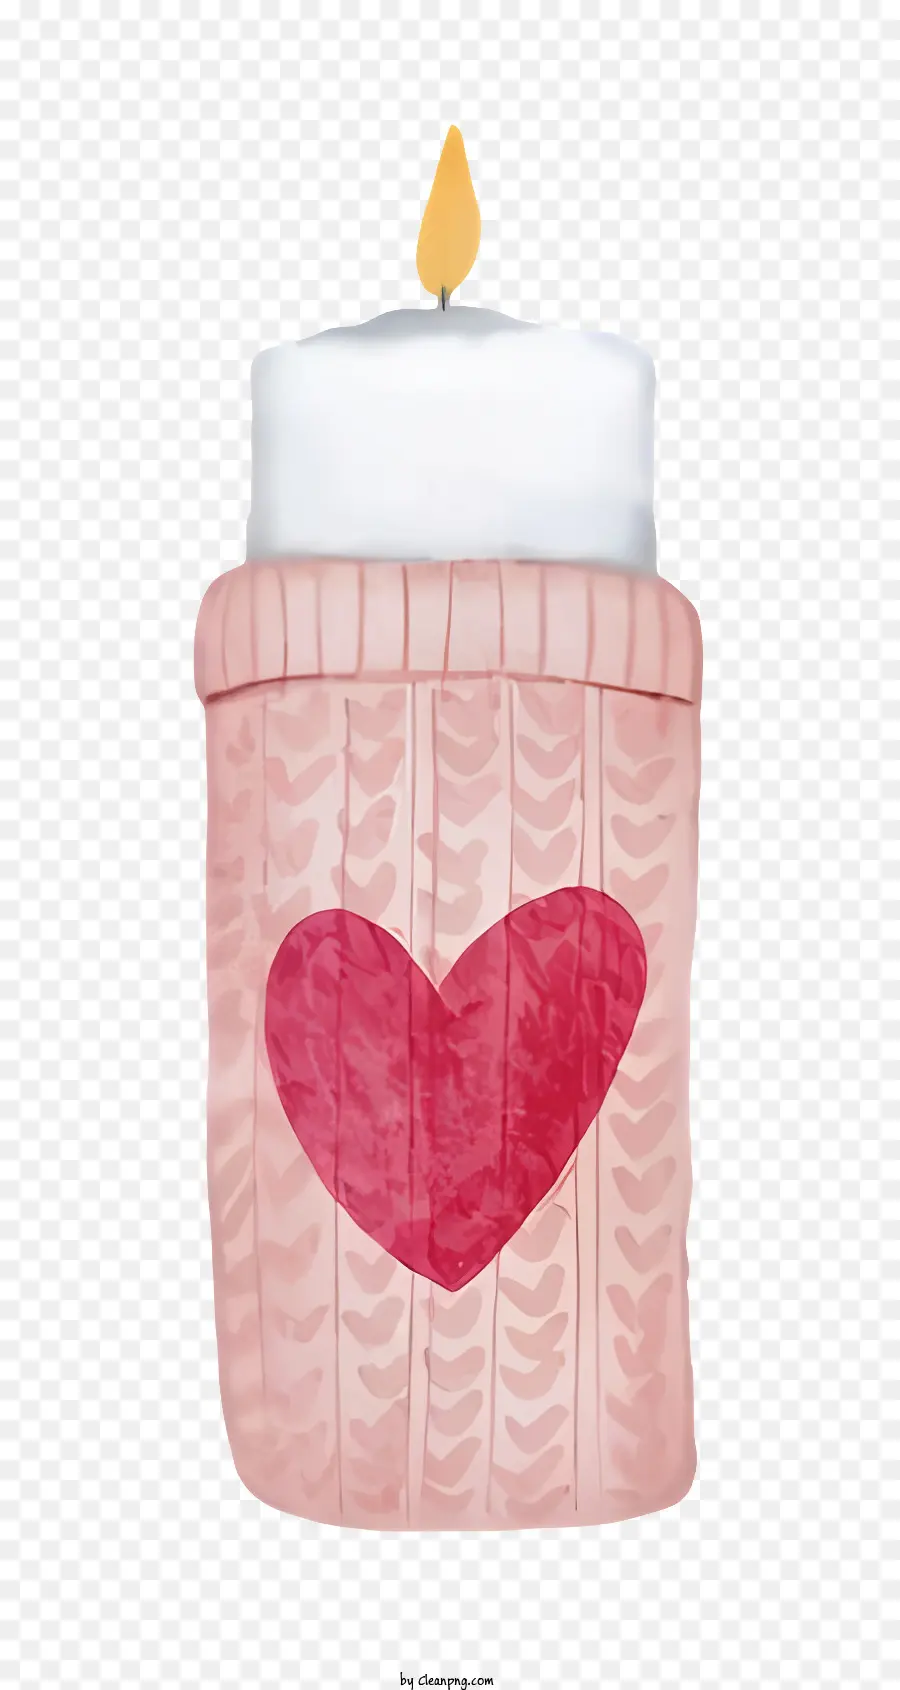 Herzförmige Kerzenrosa Kerzenkerze mit Docht Holzoberfläche Strickmuster - Beleuchtete rosa Herzkerze auf gestrickter Oberfläche